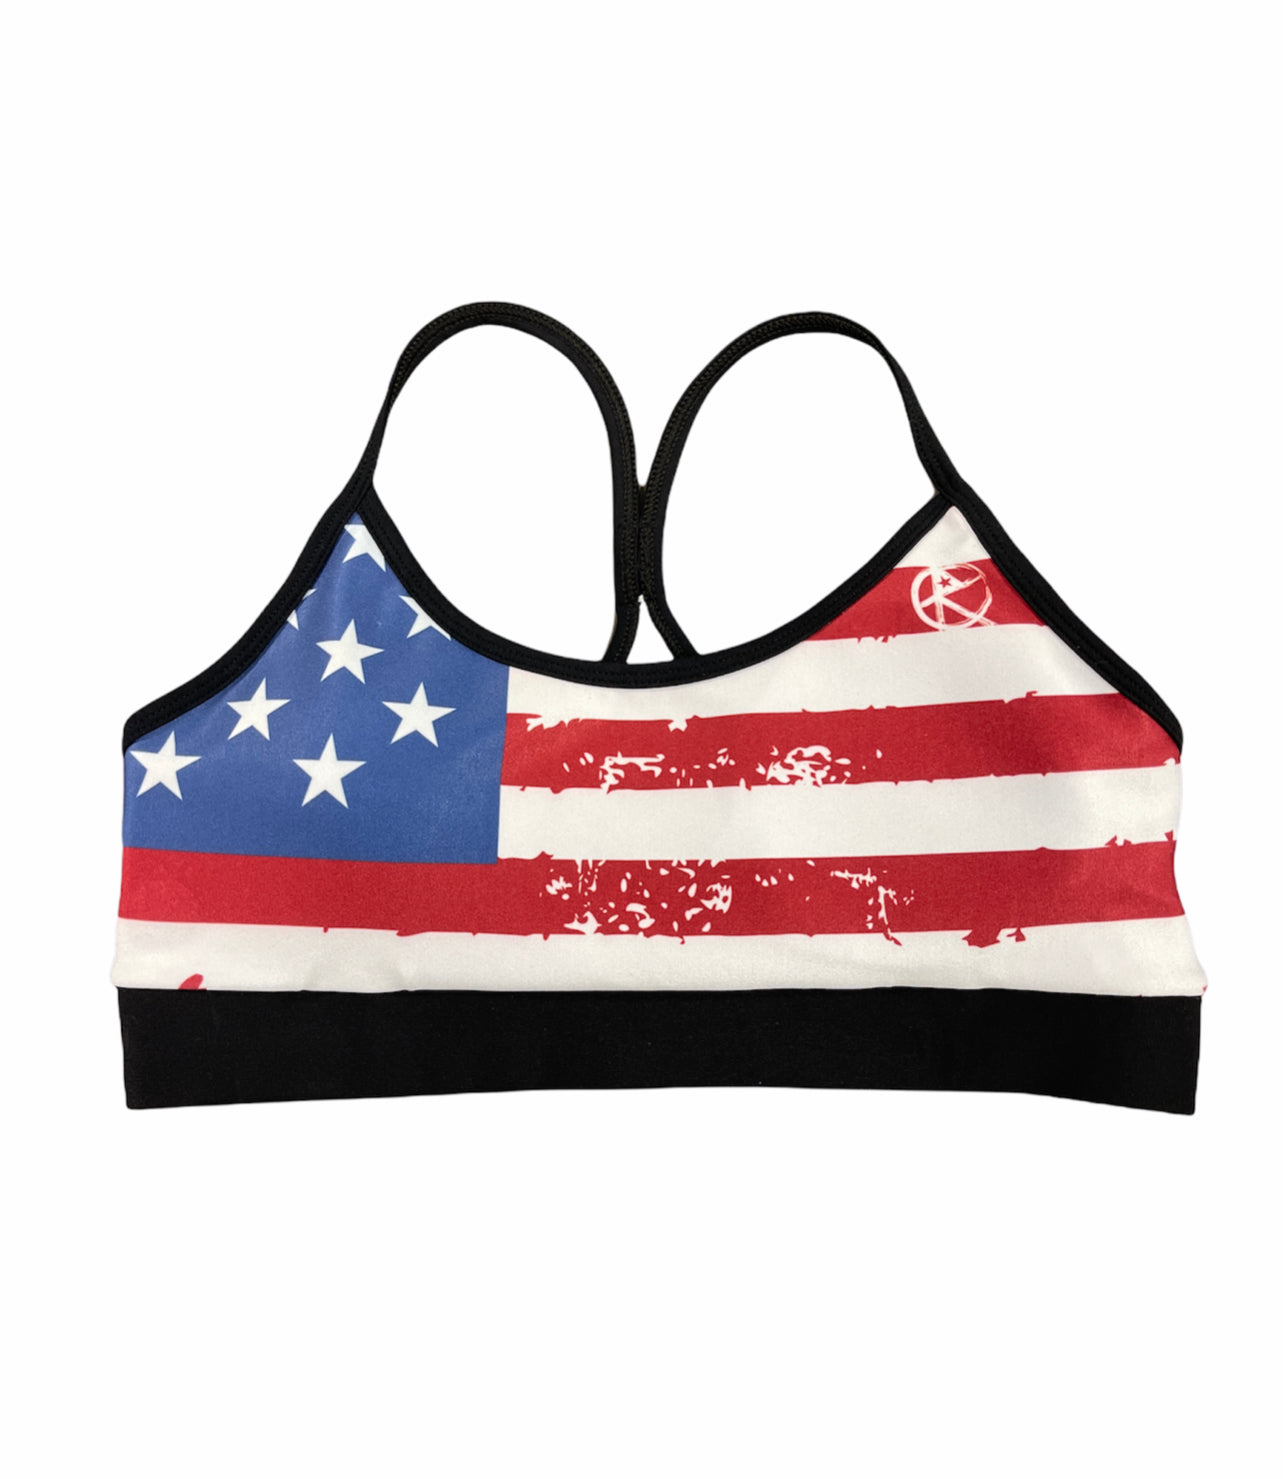 Padded Sports Bra - Proud American USA Flag Pattern (Black and